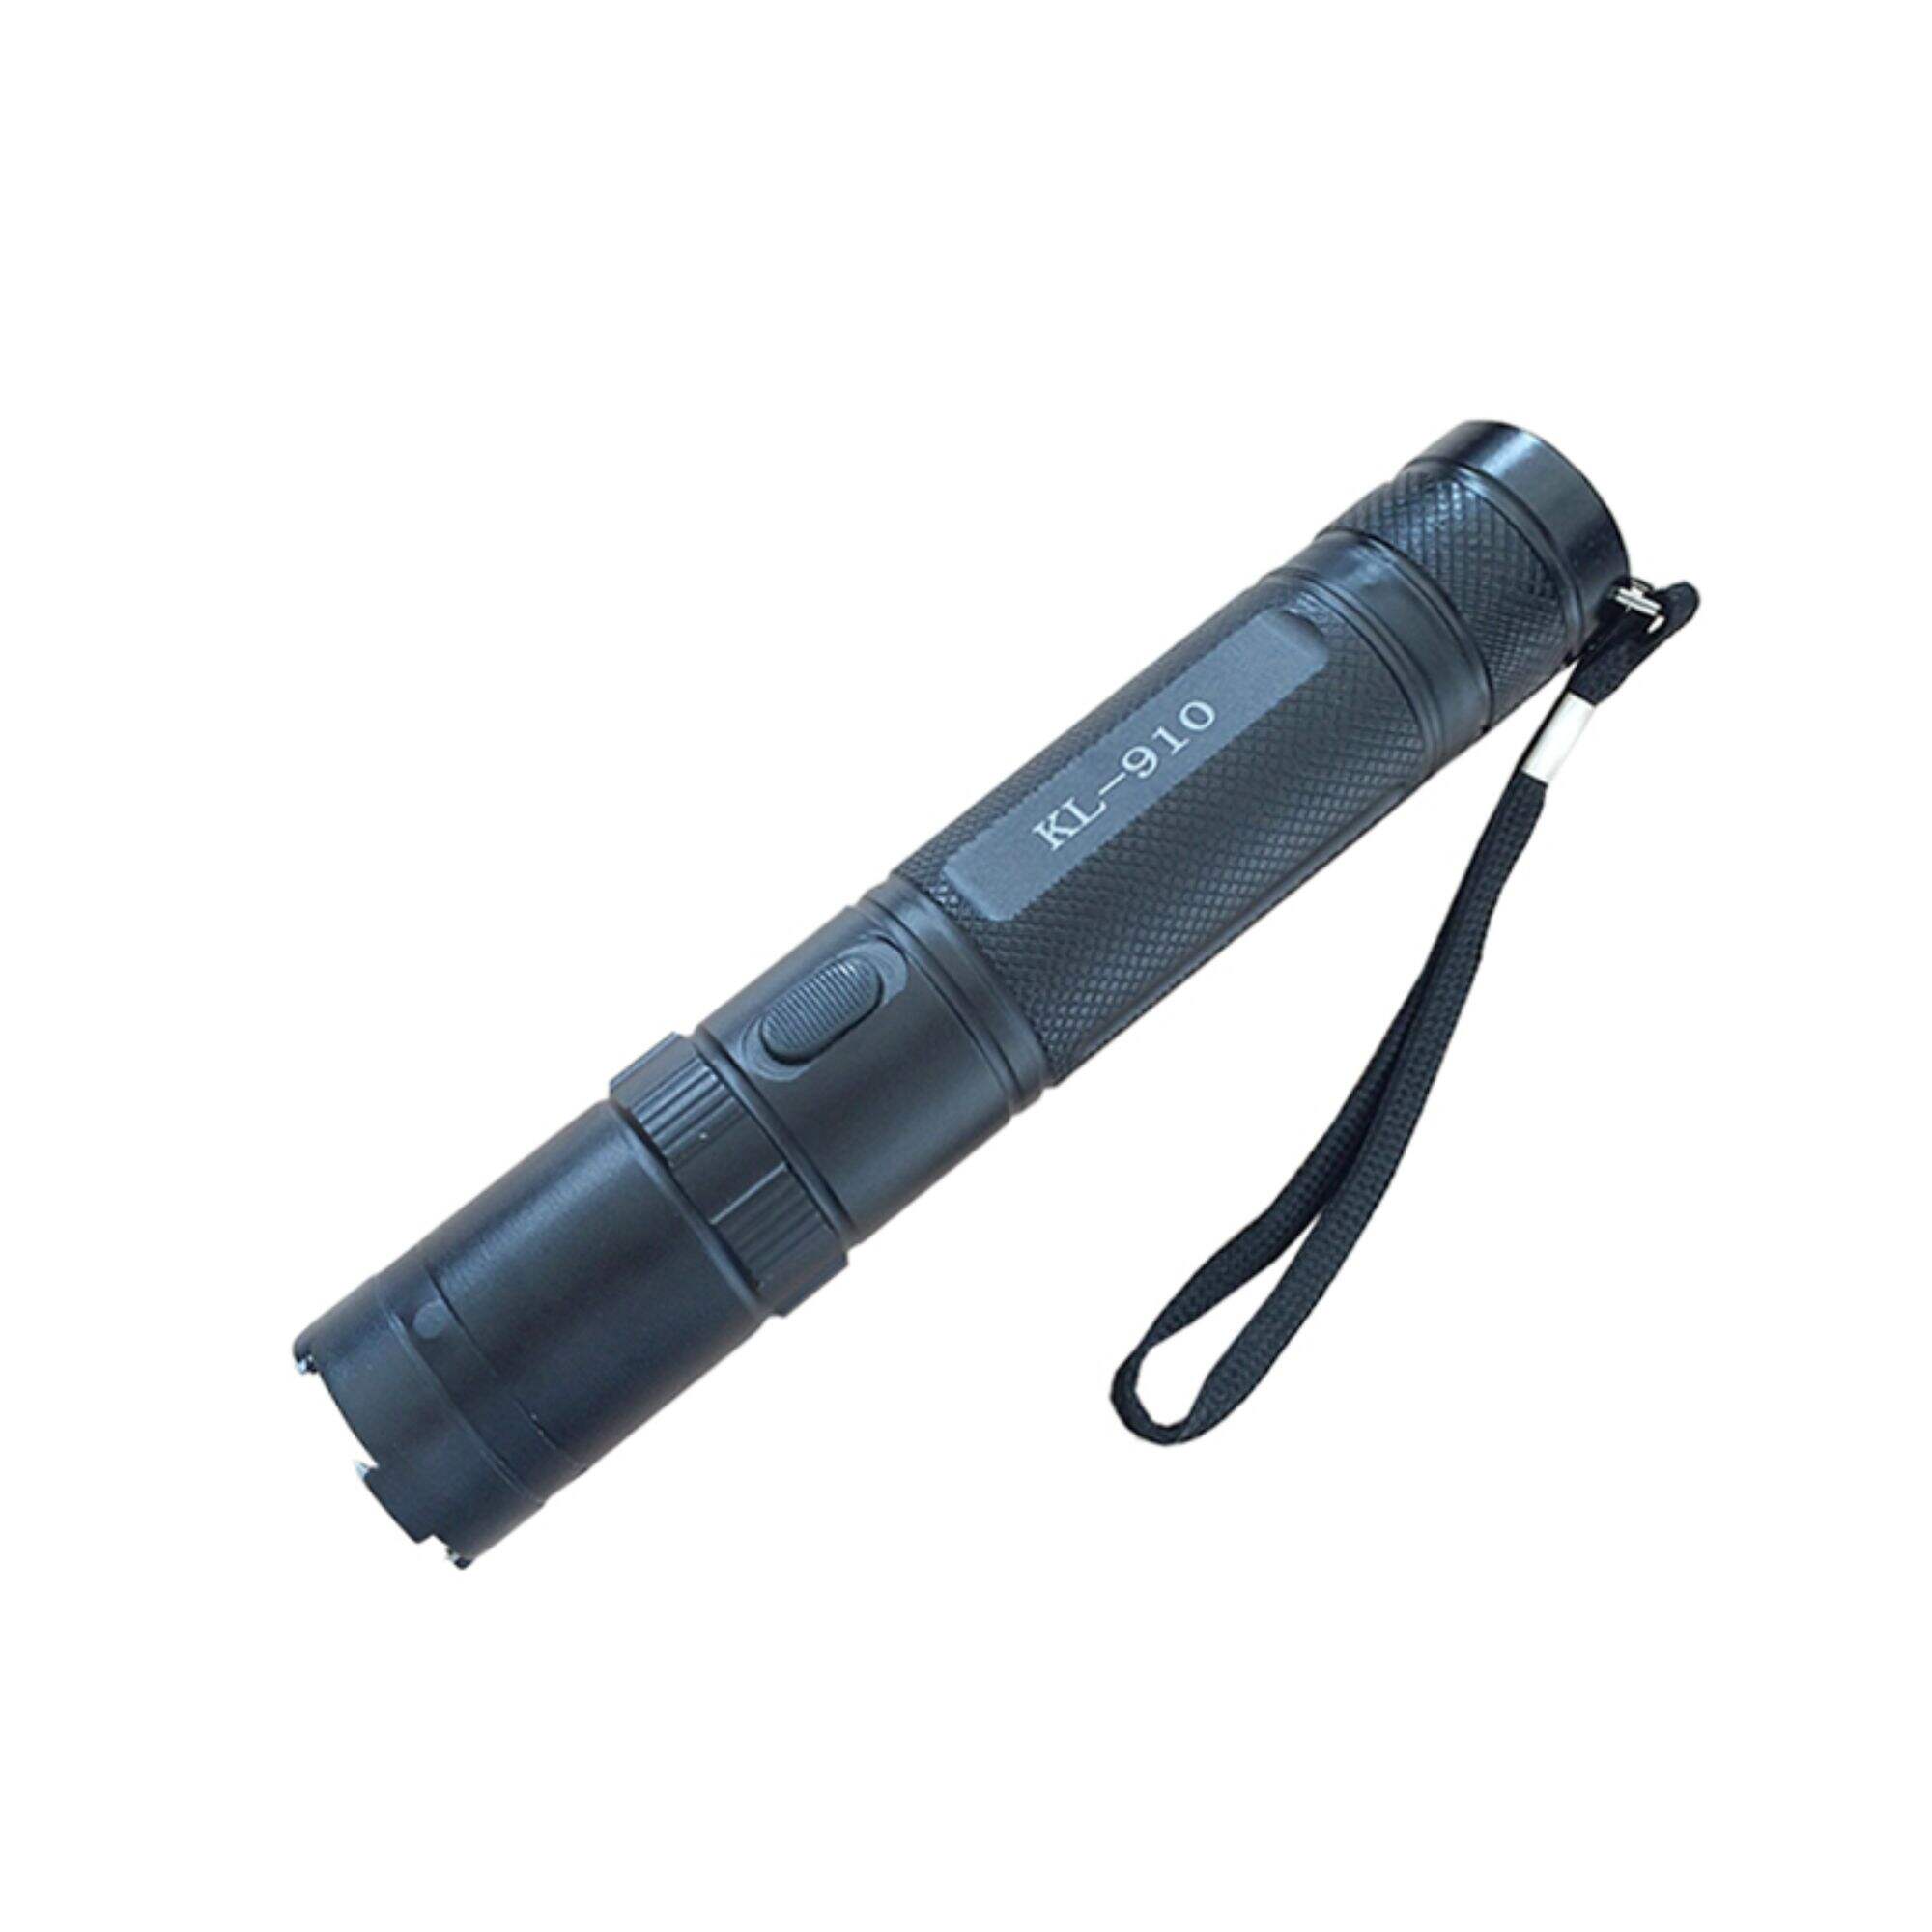 Stun flashlight 910A Aluminium alloy self-defense